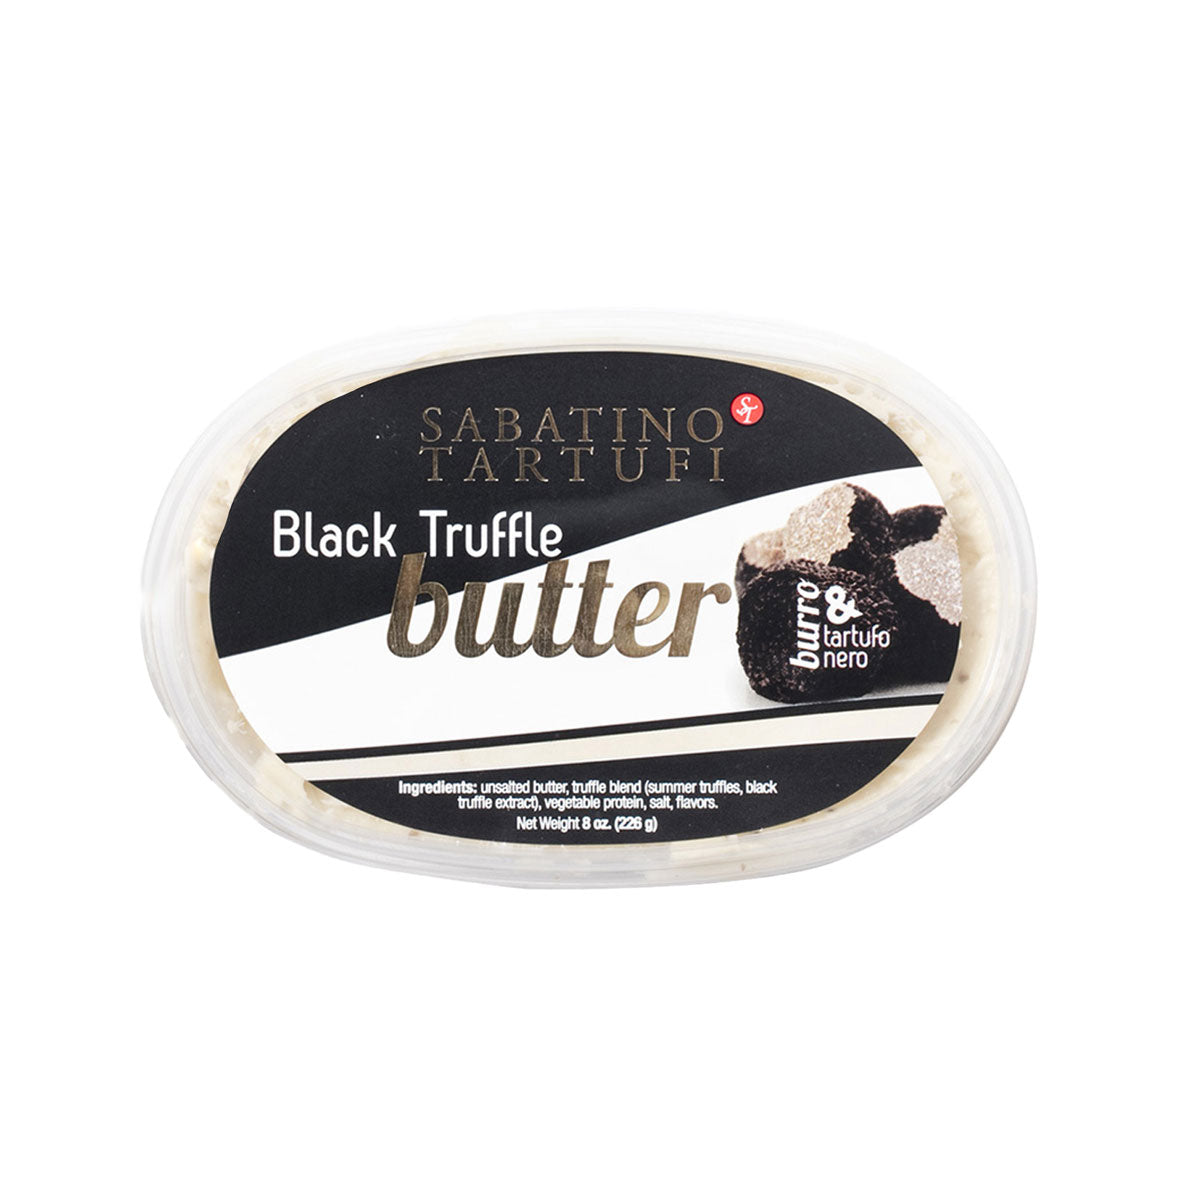 Sabatino Tartufi Black Truffle Butter